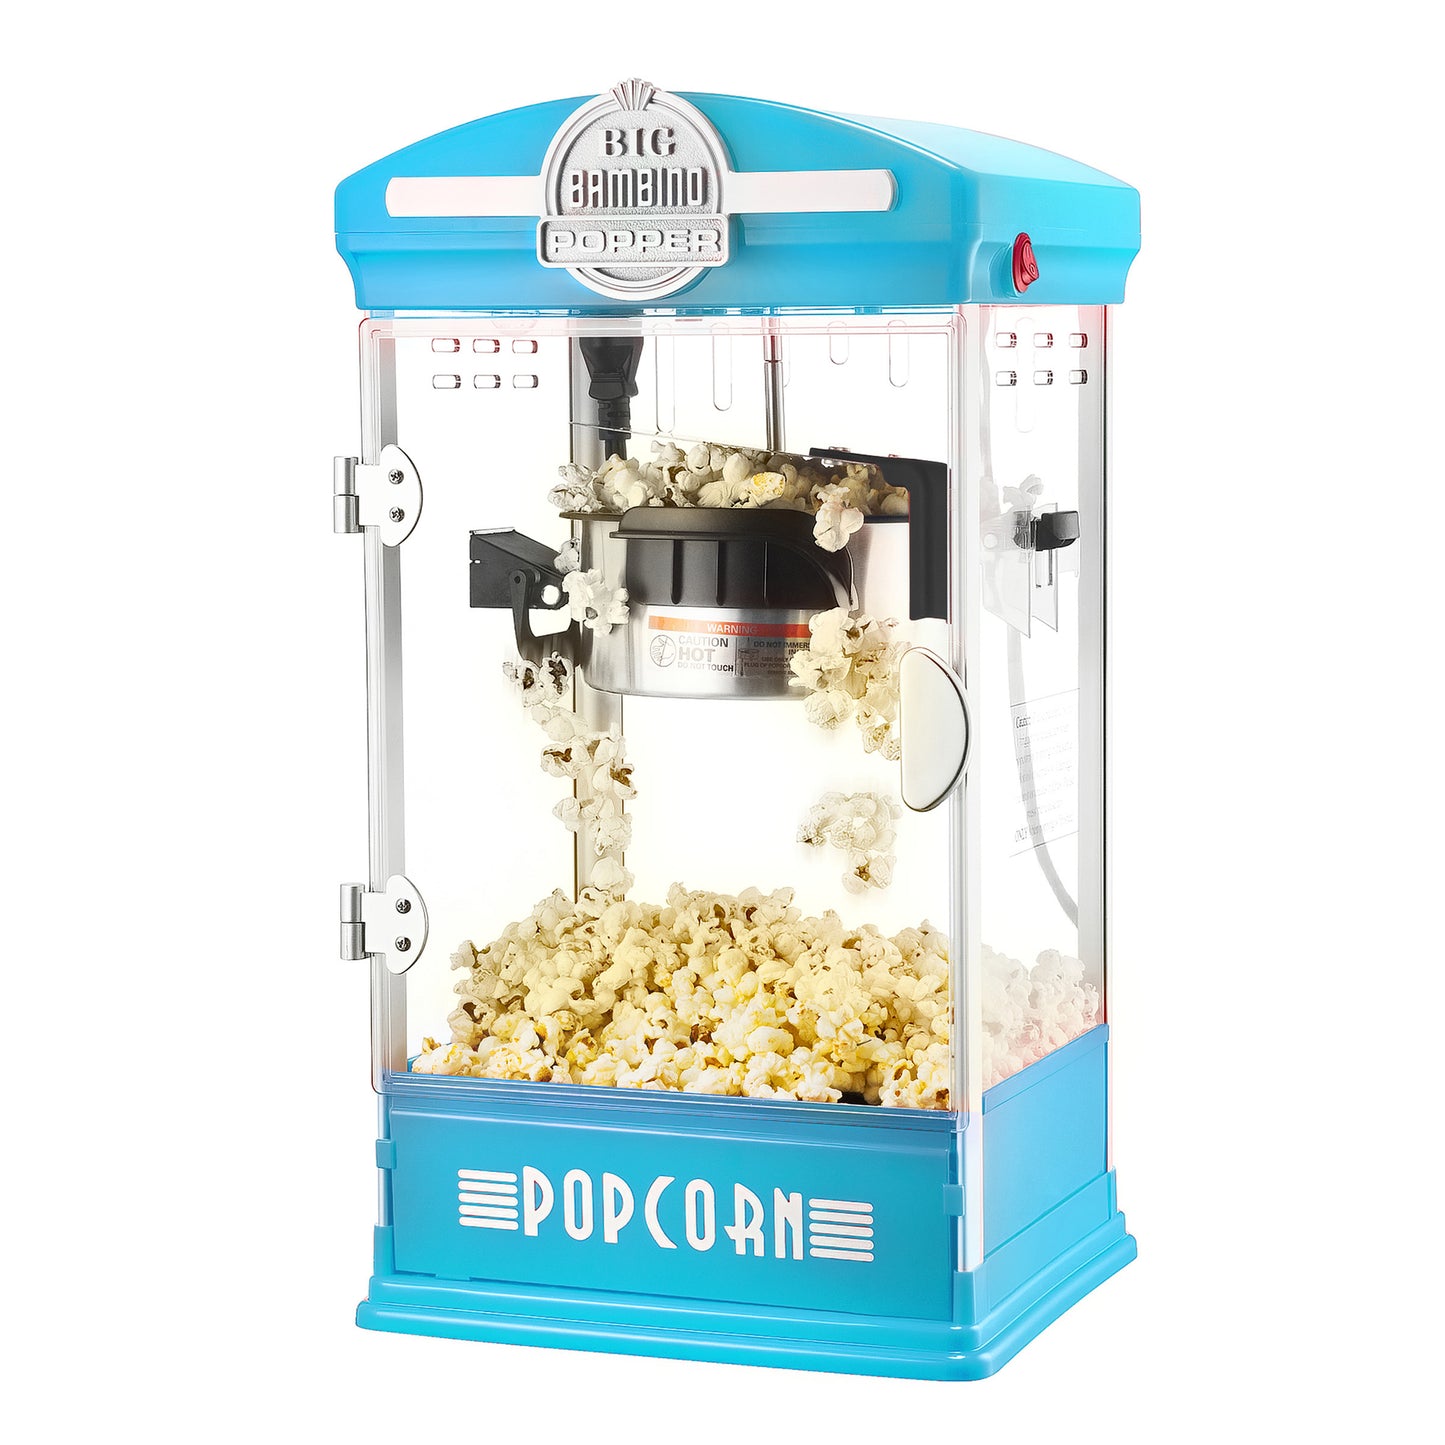 Big Bambino Countertop Popcorn Machine with 4 Ounce Kettle - Blue